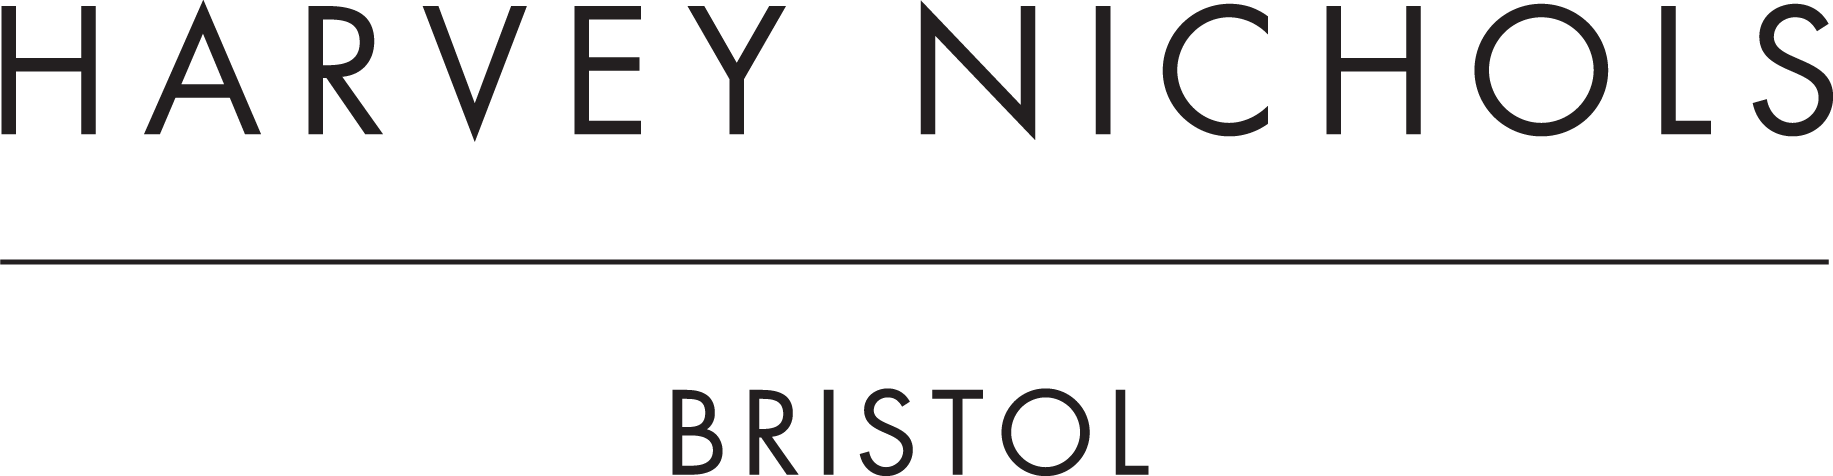 Harvey Nichols Bristol logo